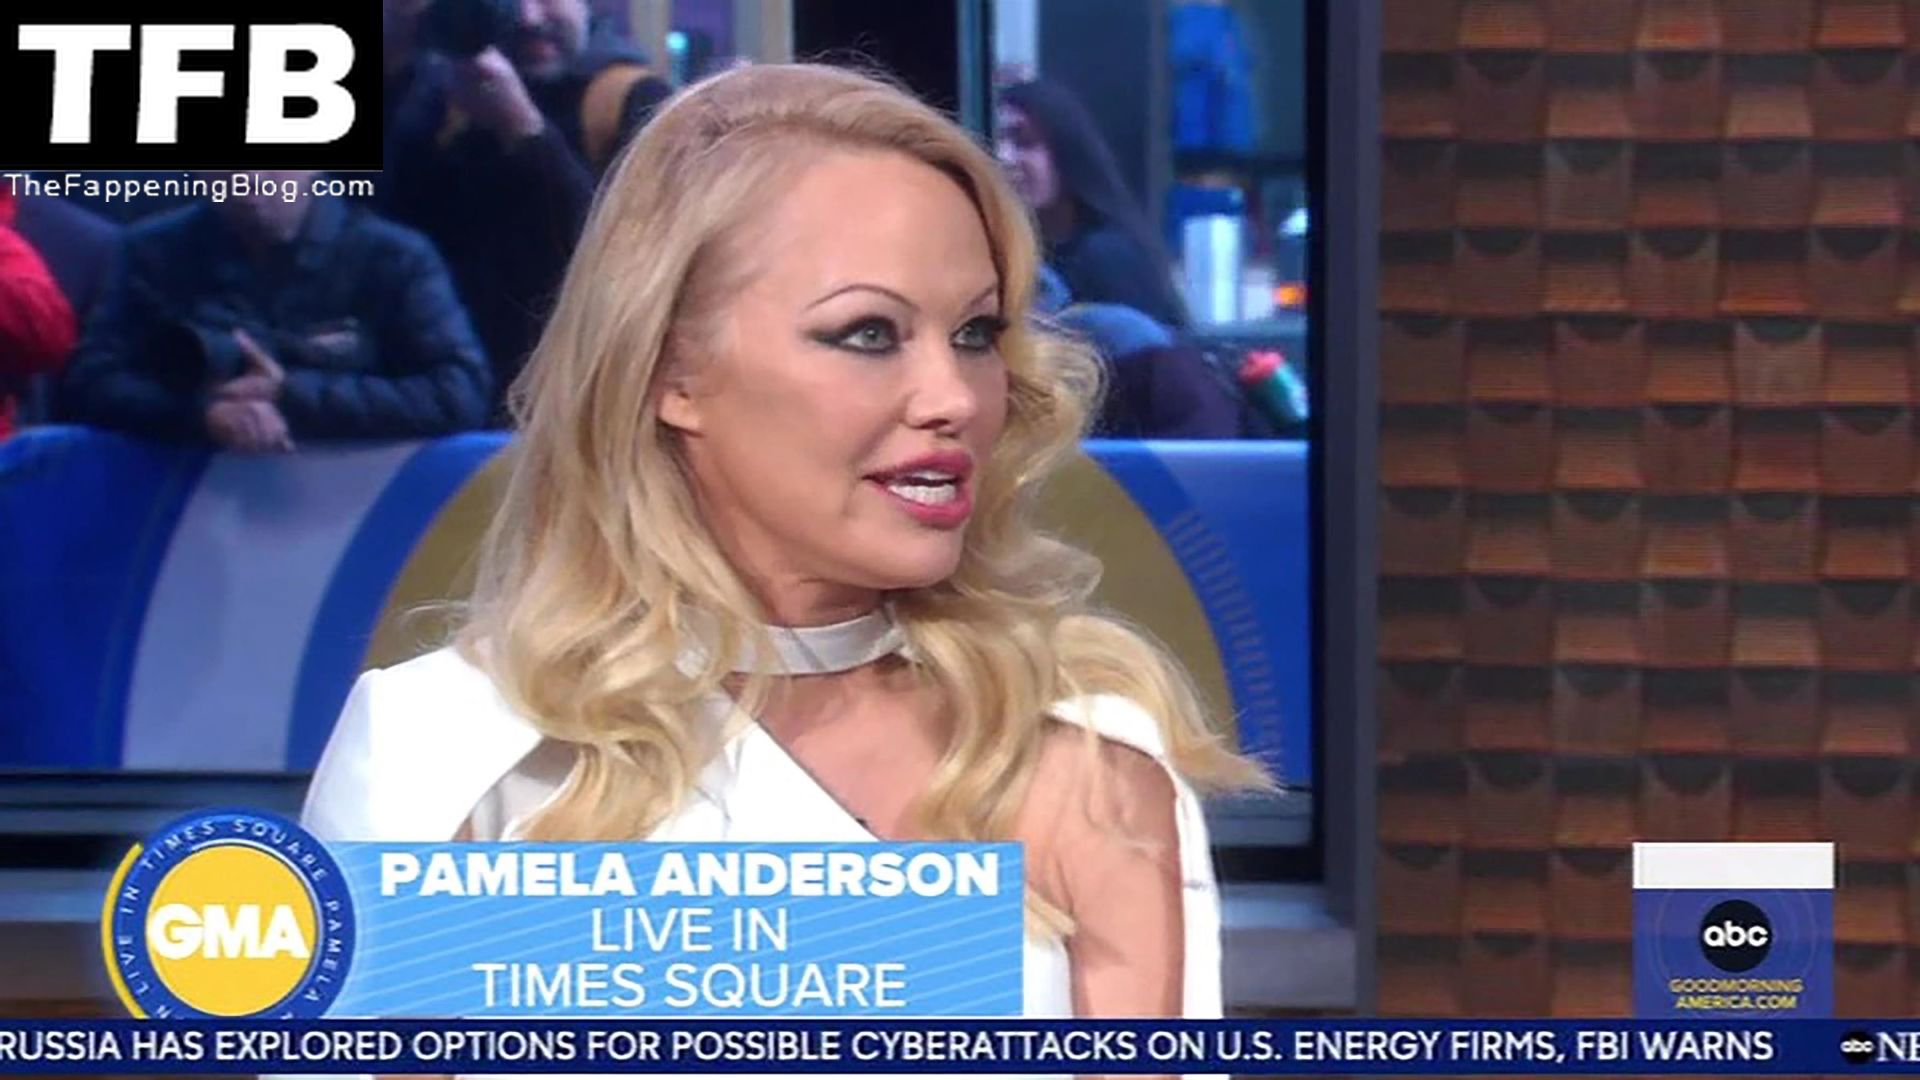 Pamela-Anderson-Hot-The-Fappening-Blog-20.jpg